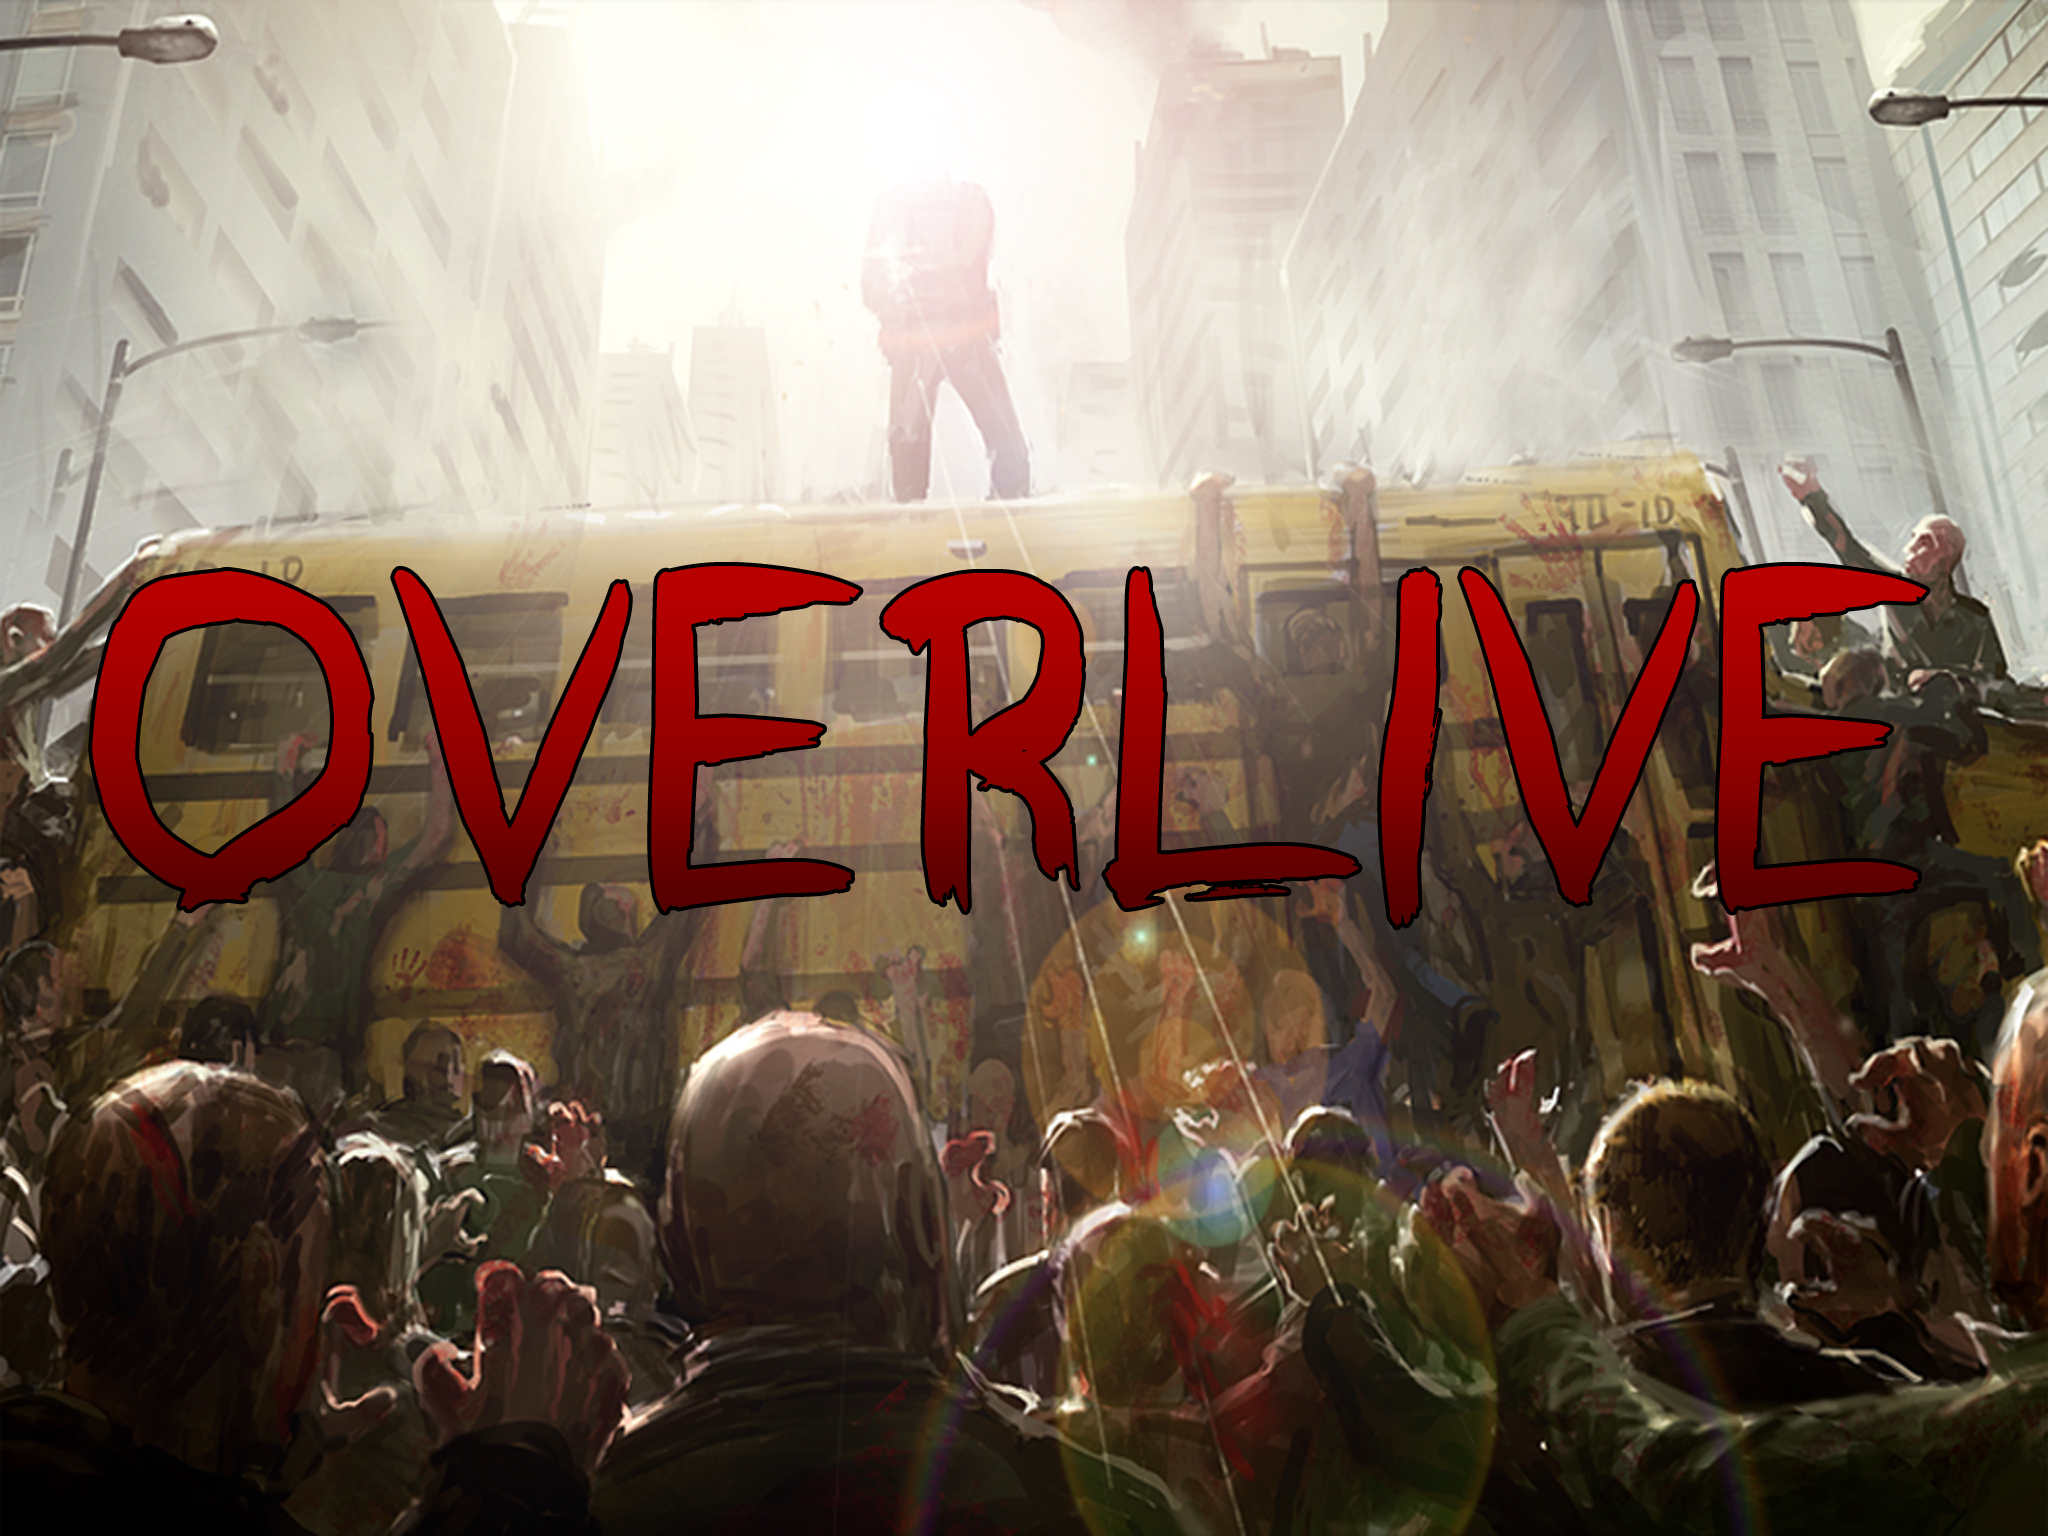 Overlive Zombie Survival RPG released! news Indie DB